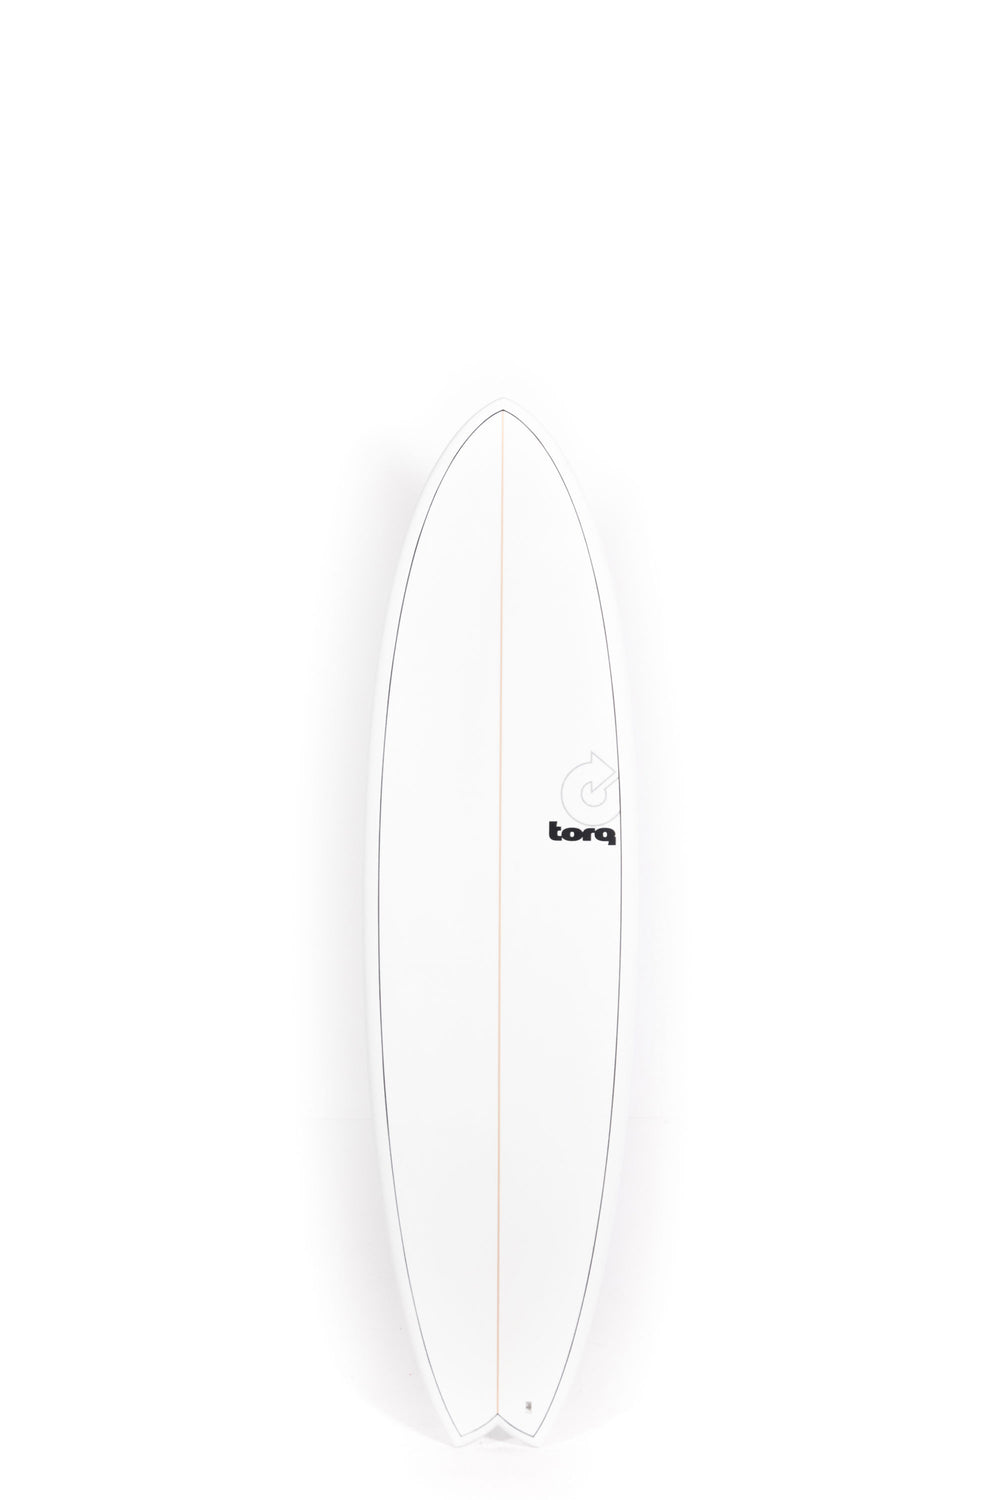 Pukas Surf Shop - Torq Surfboards - MODFISH - 6'10